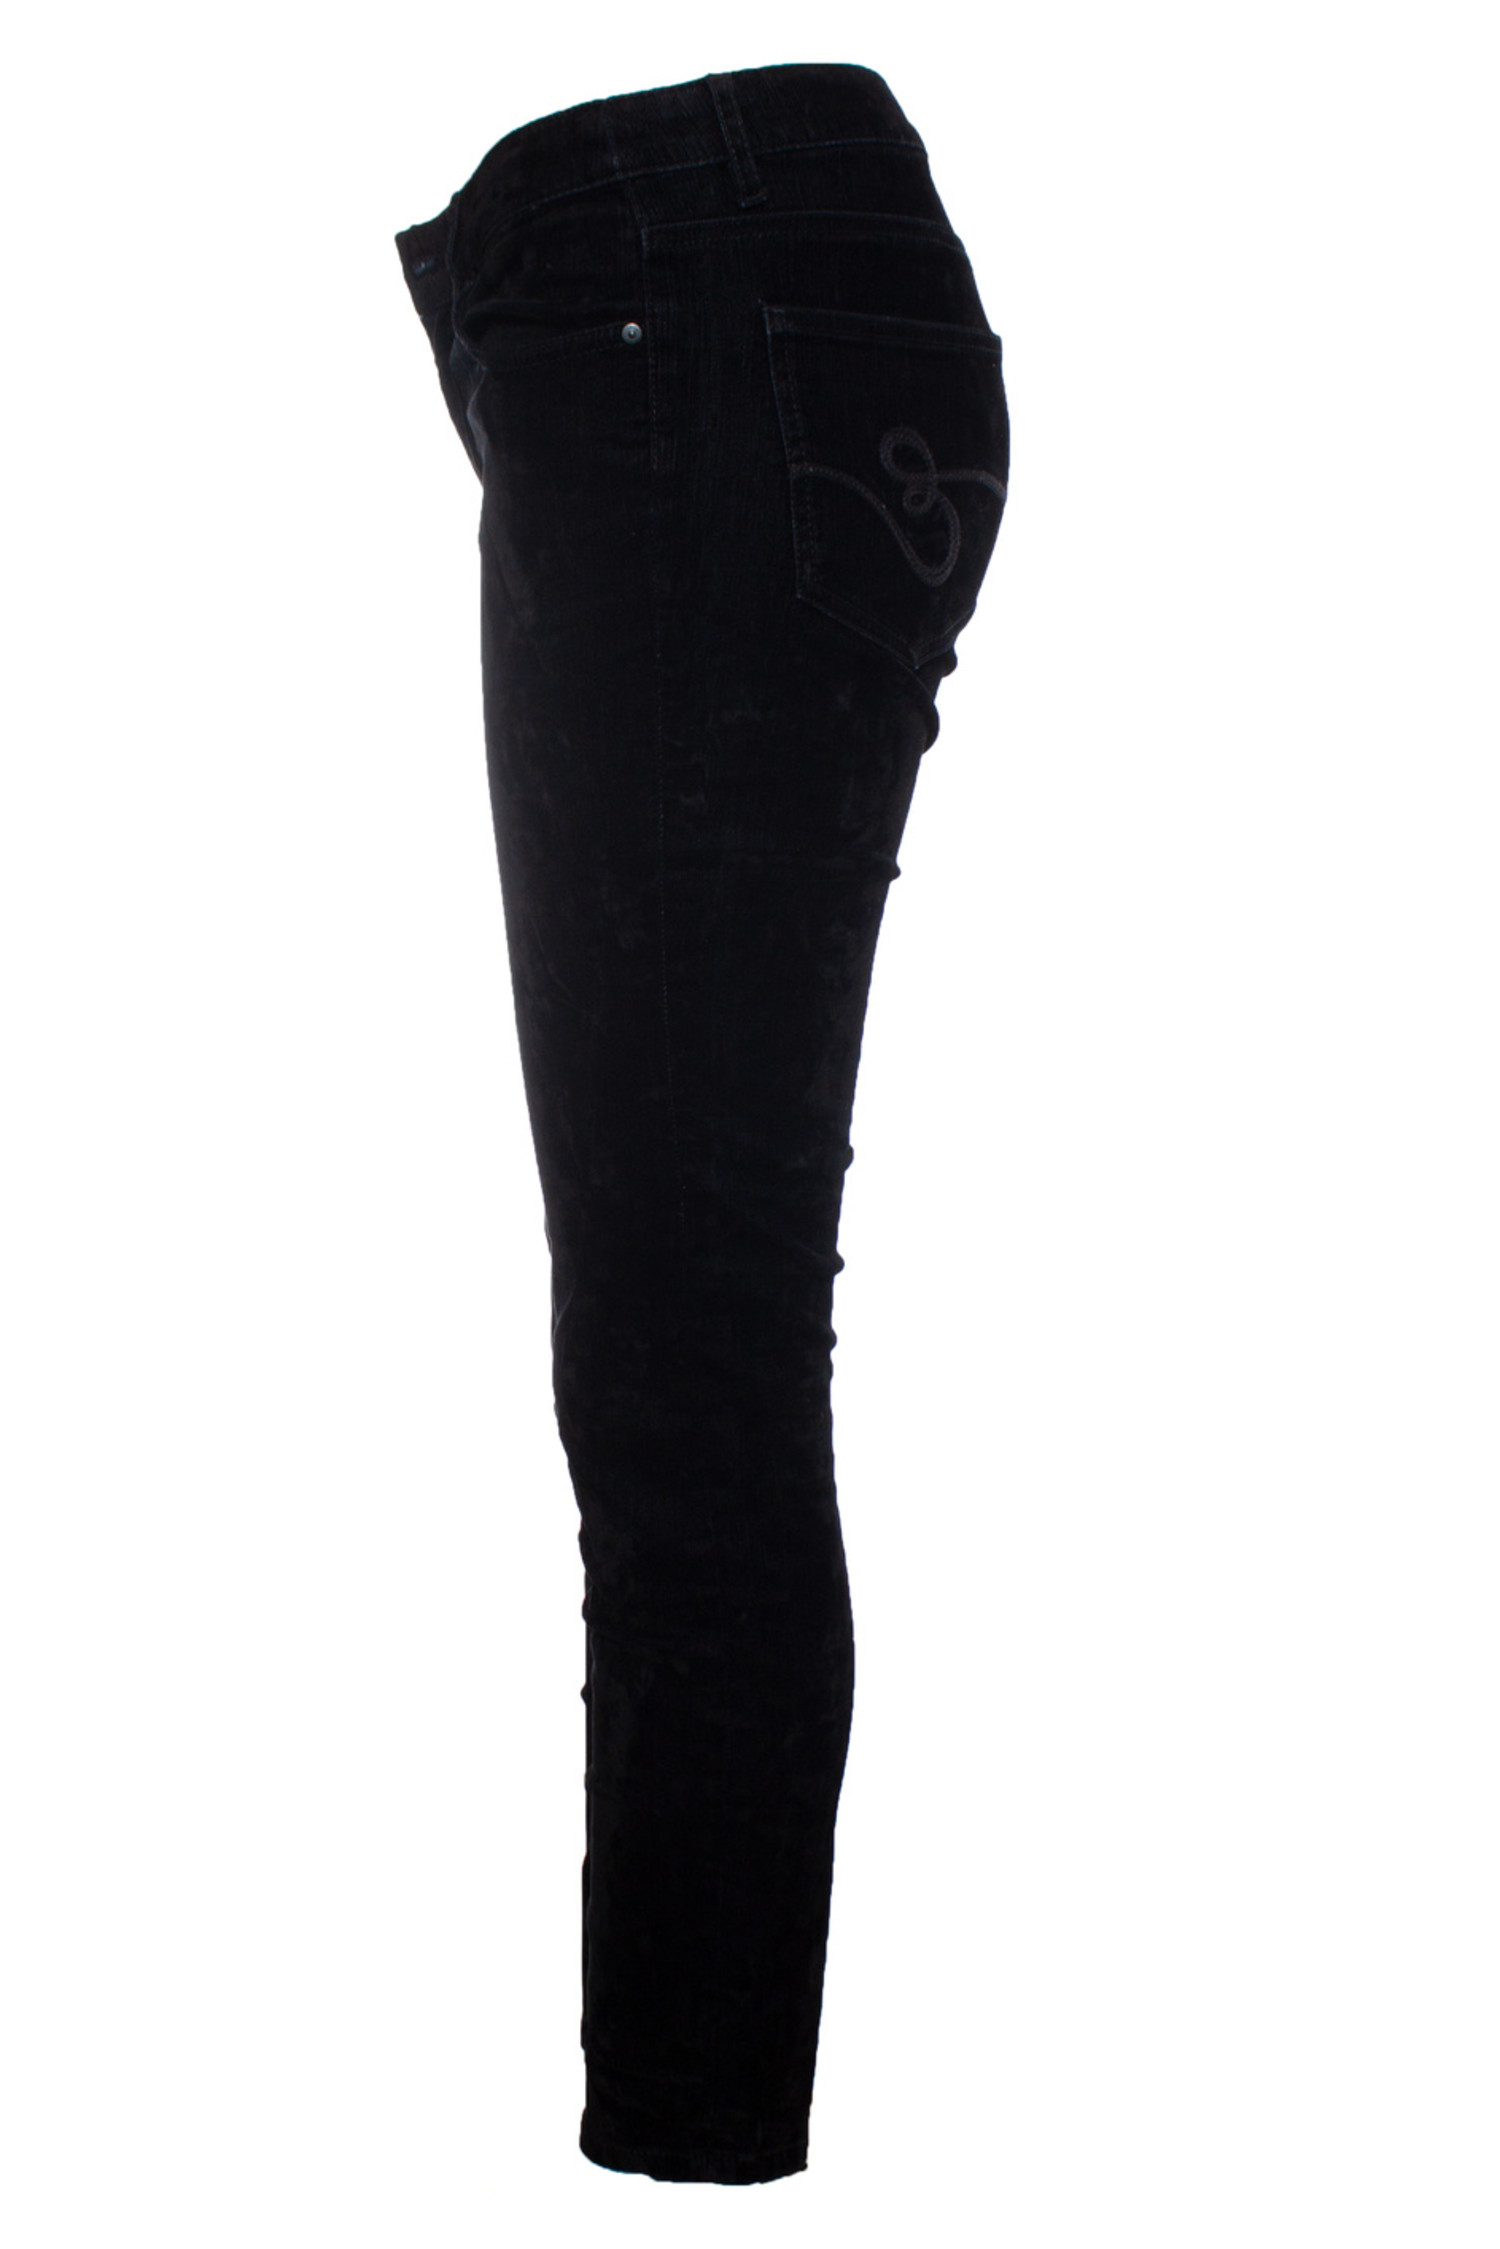 Escada sport, black jeans with velvet print - Unique Designer Pieces